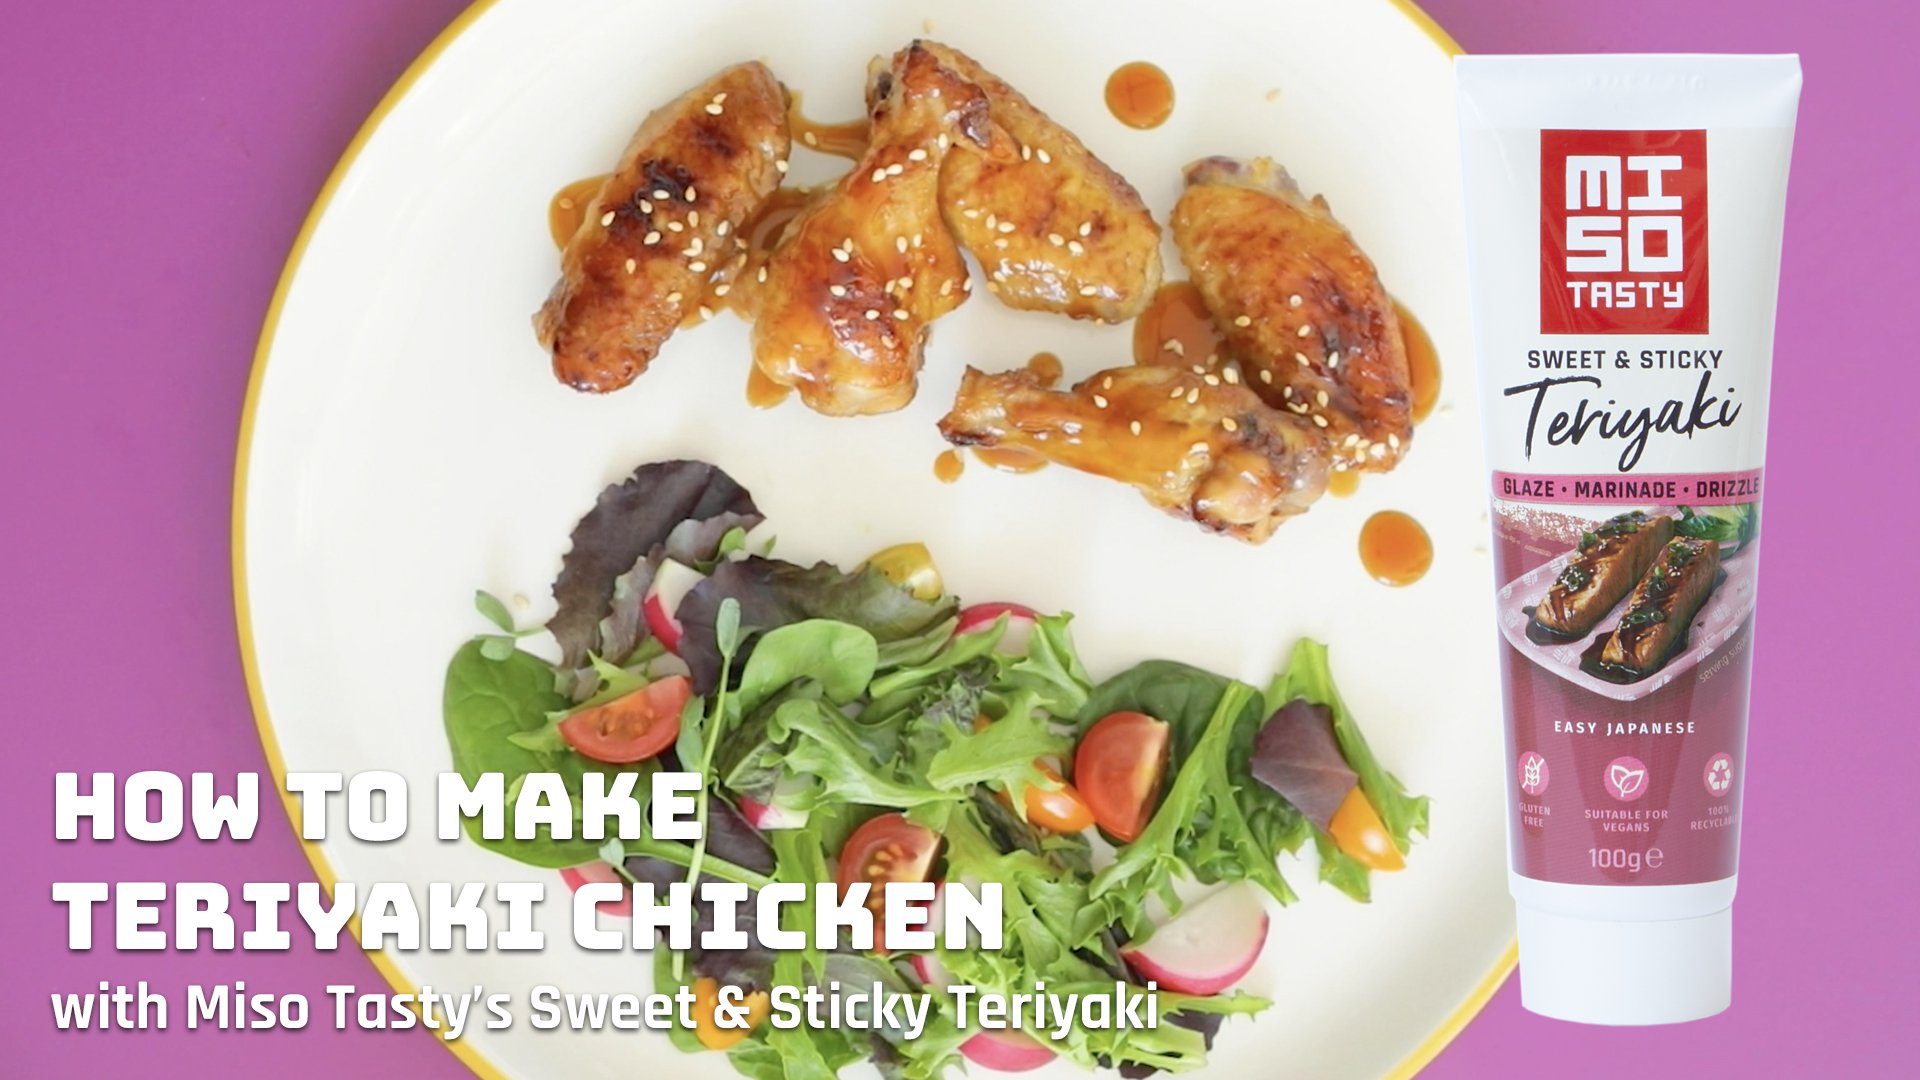 Miso Tasty’s Quick Teriyaki Chicken